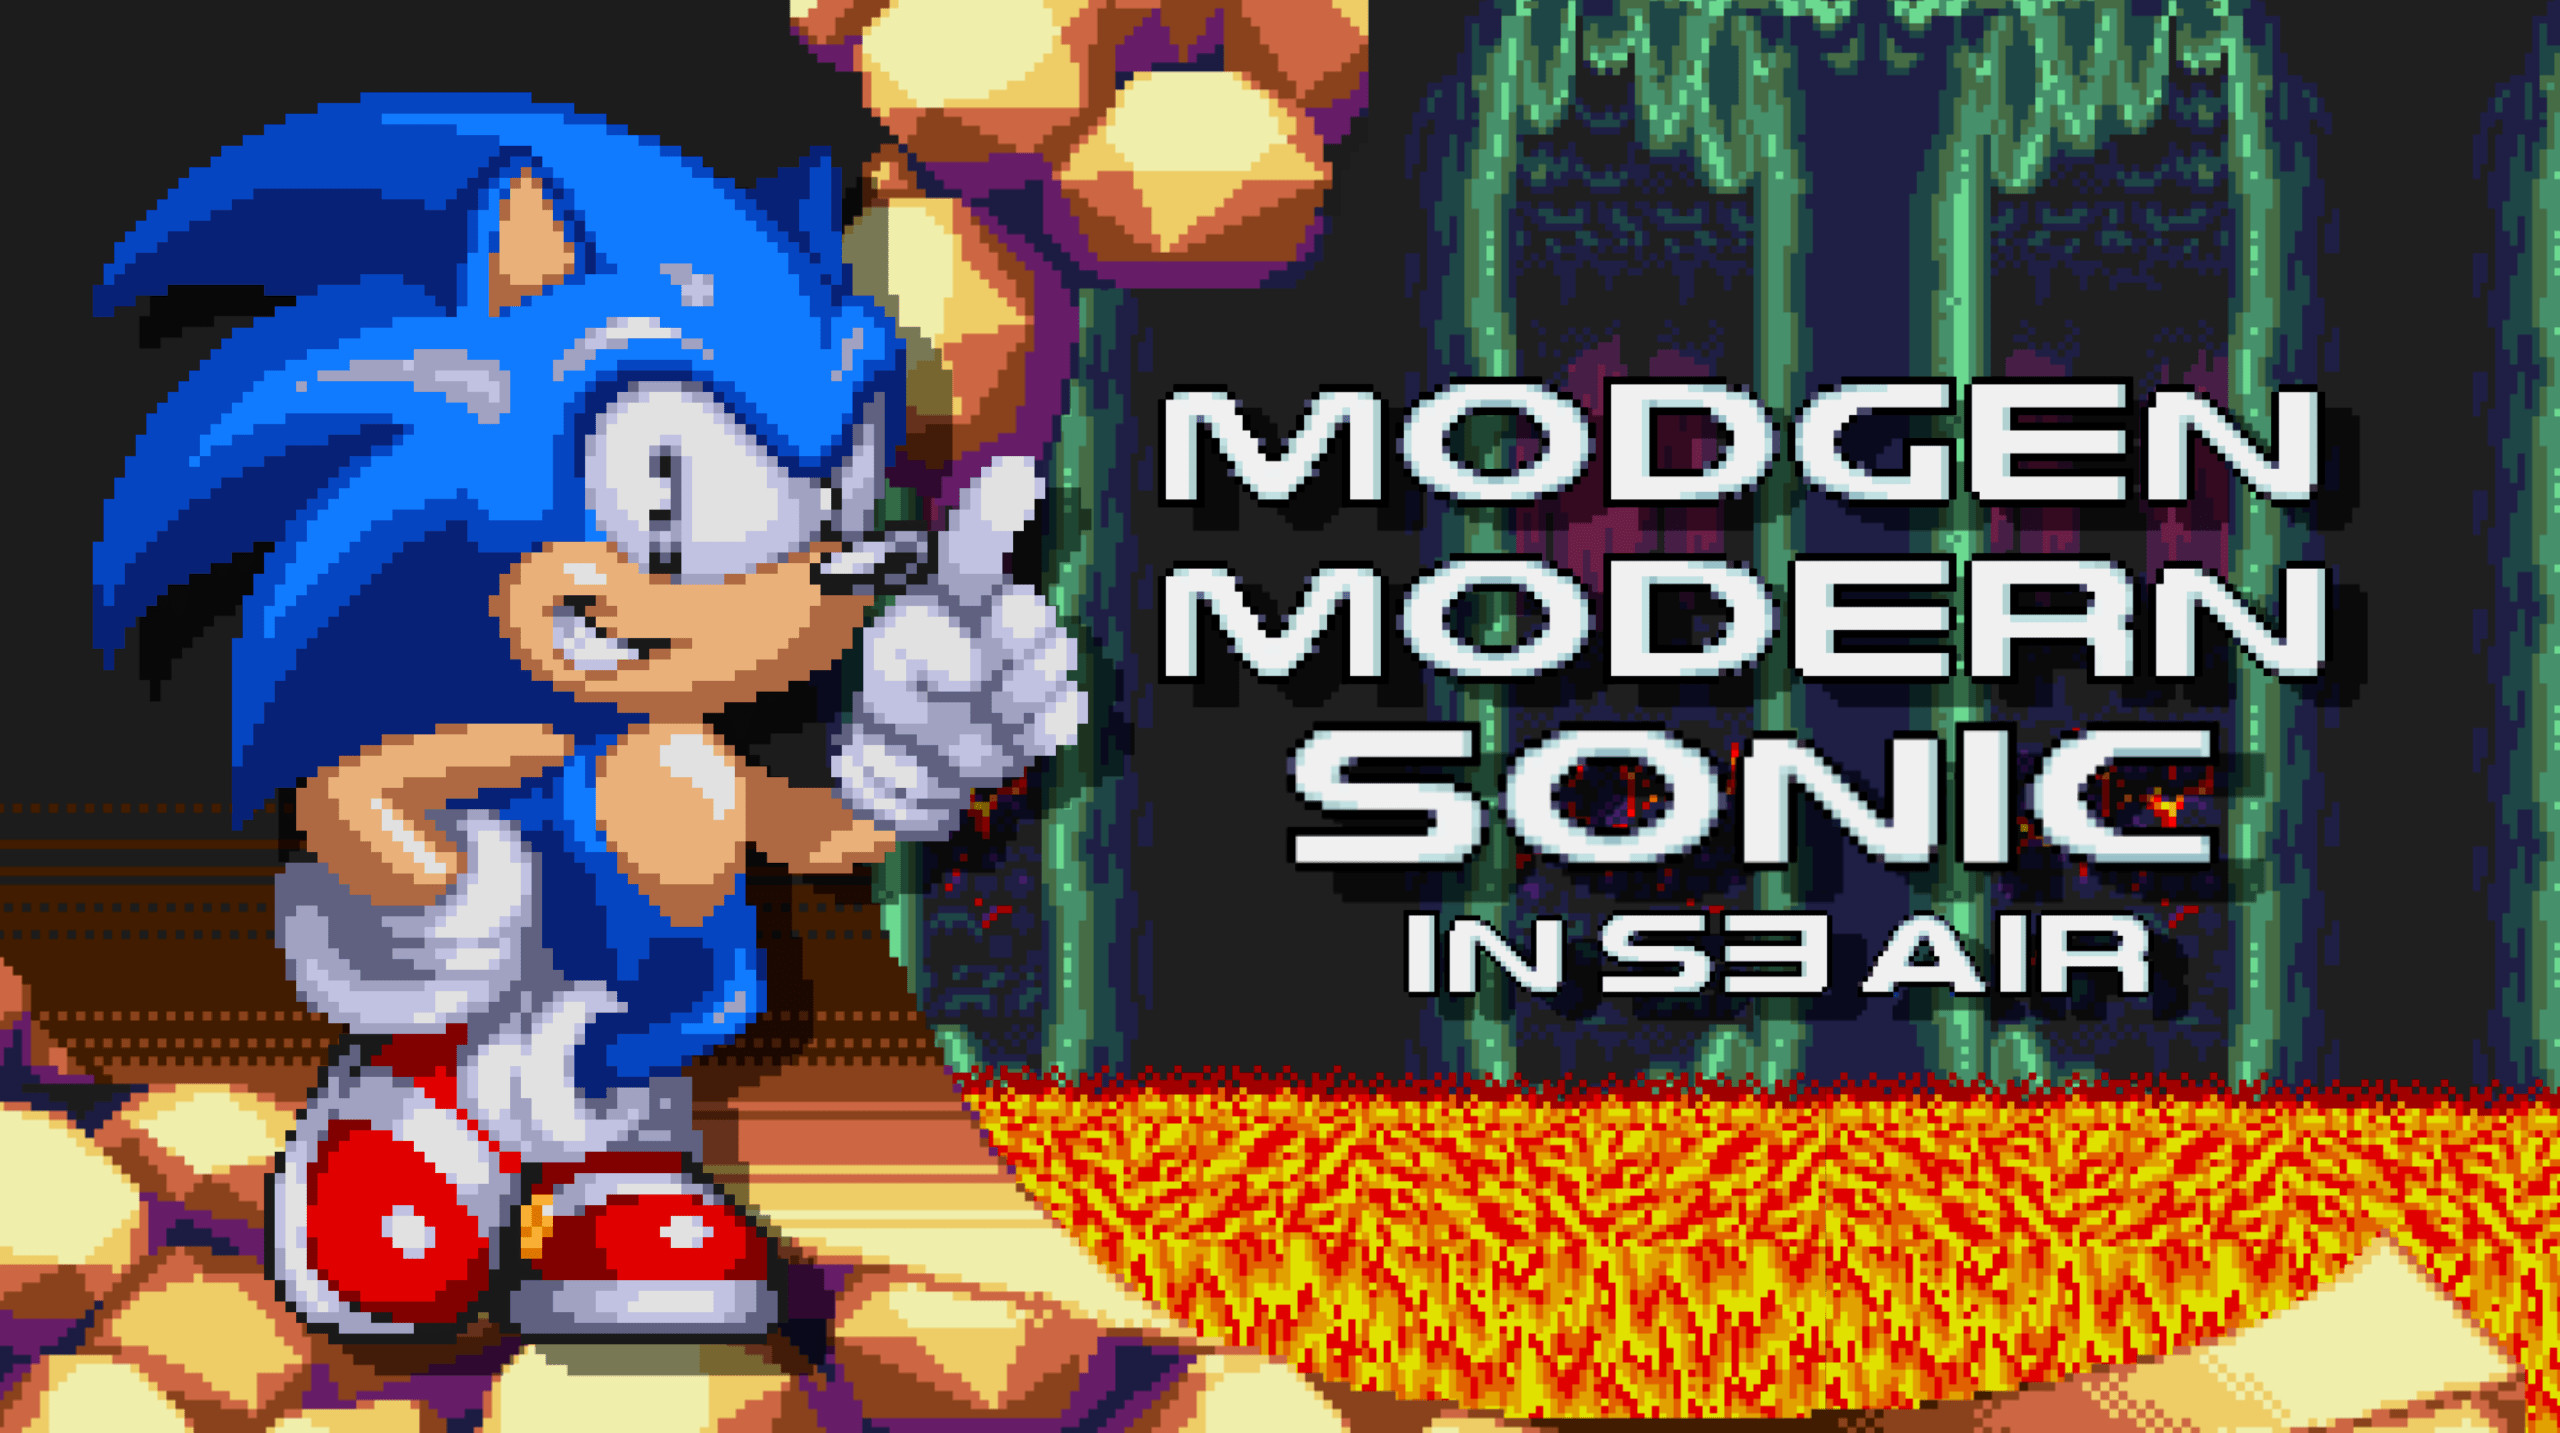 Sonic 3 air exe. Modgen Sonic 3 Air. Моды на Sonic 3 a.i.r. Modern Sonic 3 a.i.r. Спрайты Соника 3.